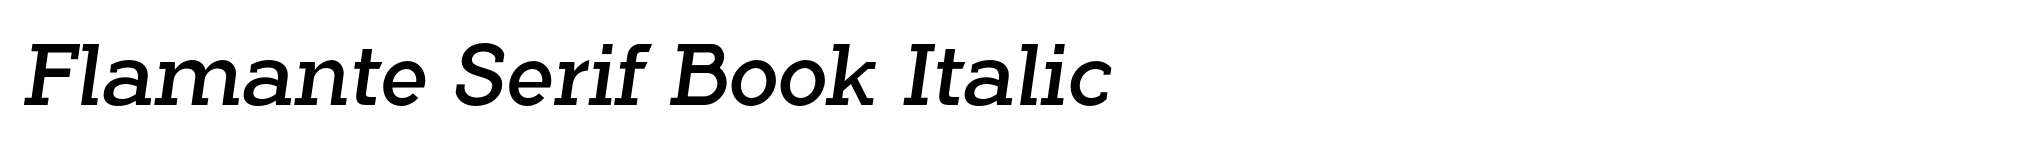 Flamante Serif Book Italic image